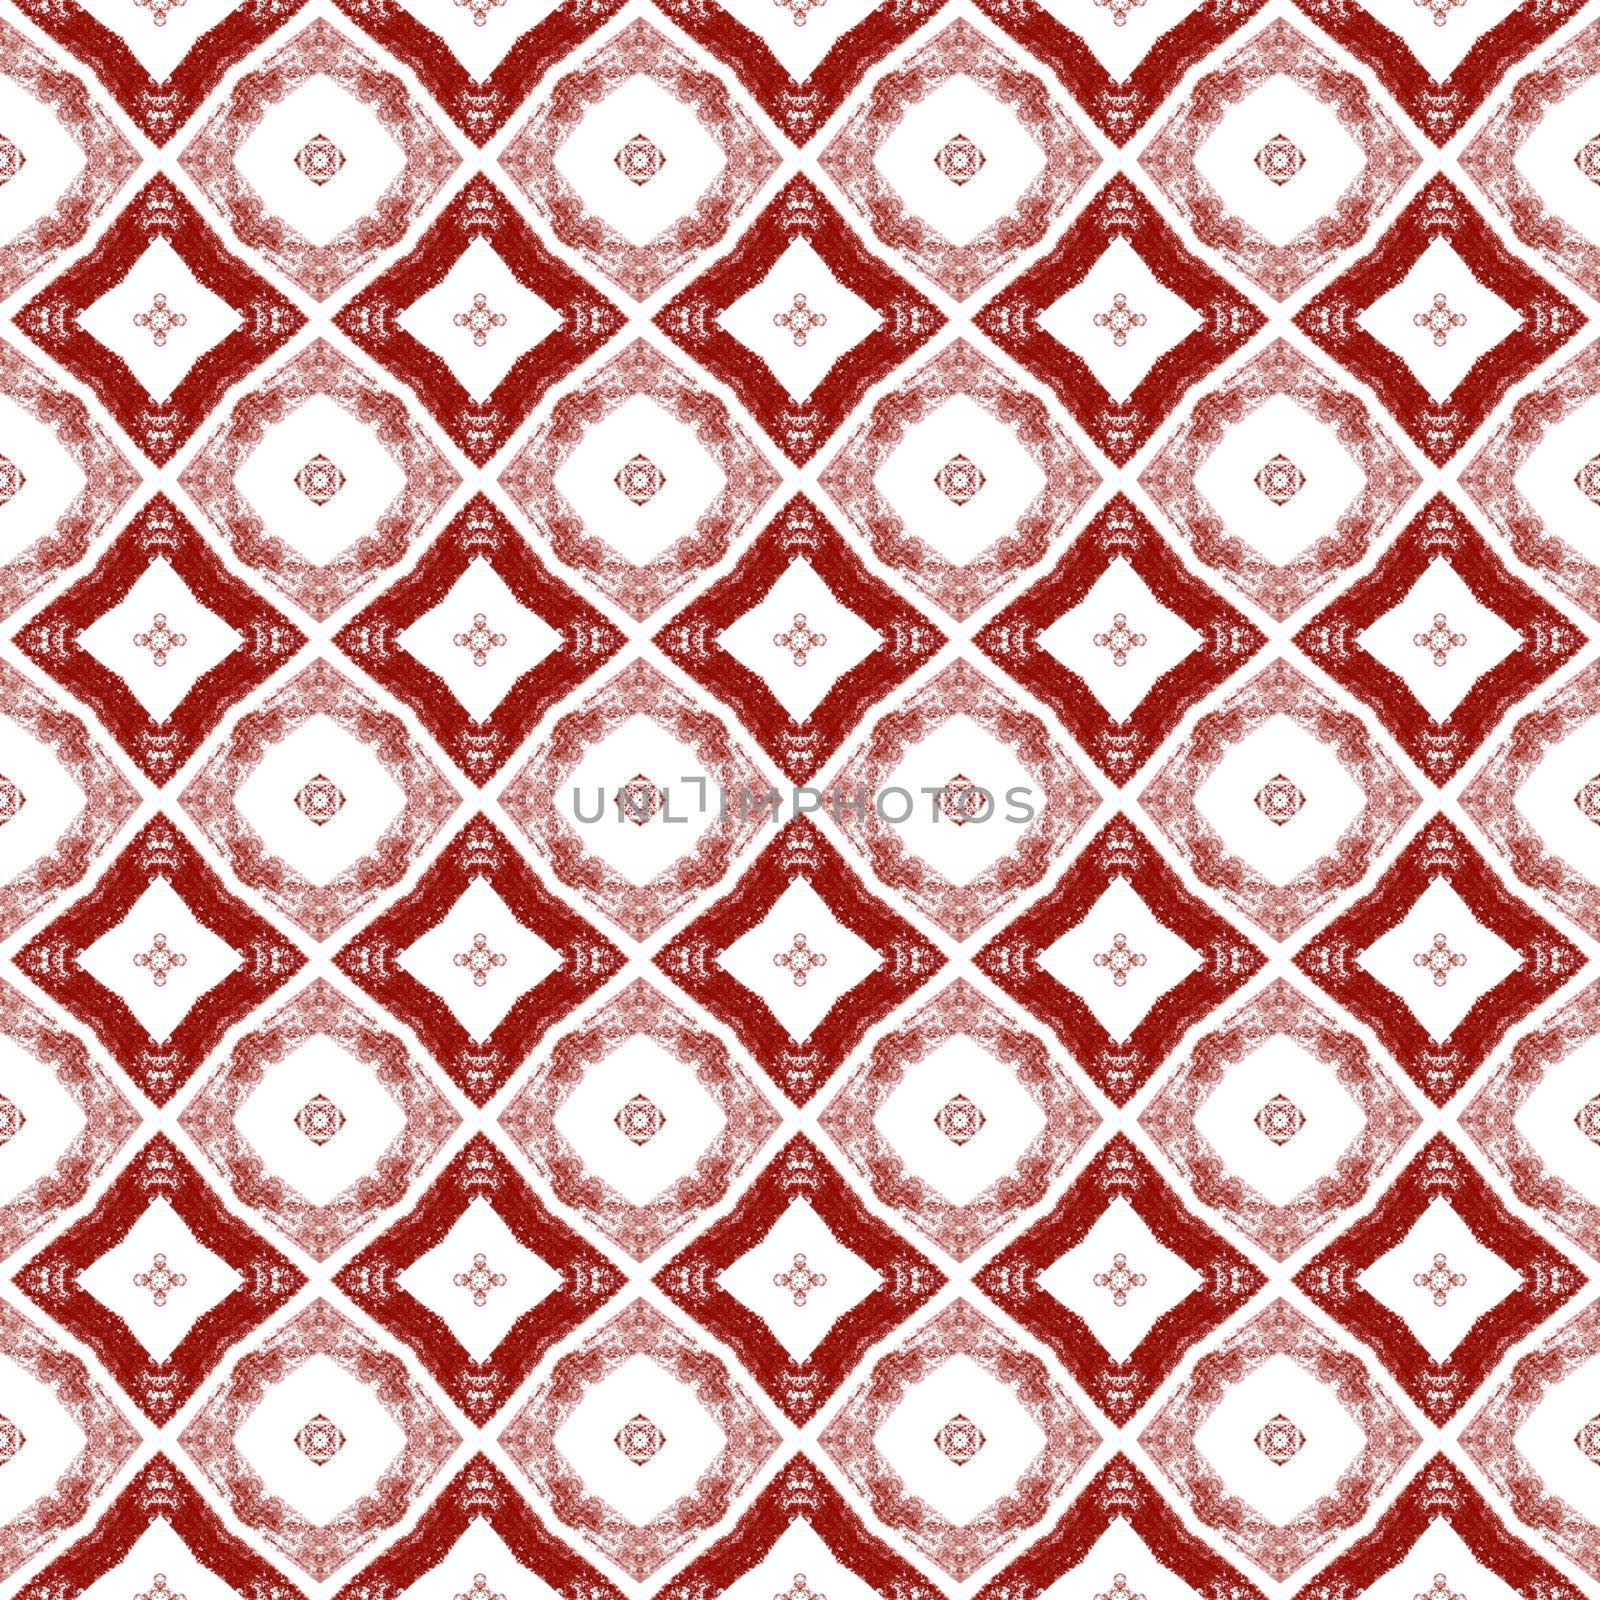 Striped hand drawn pattern. Wine red symmetrical by beginagain